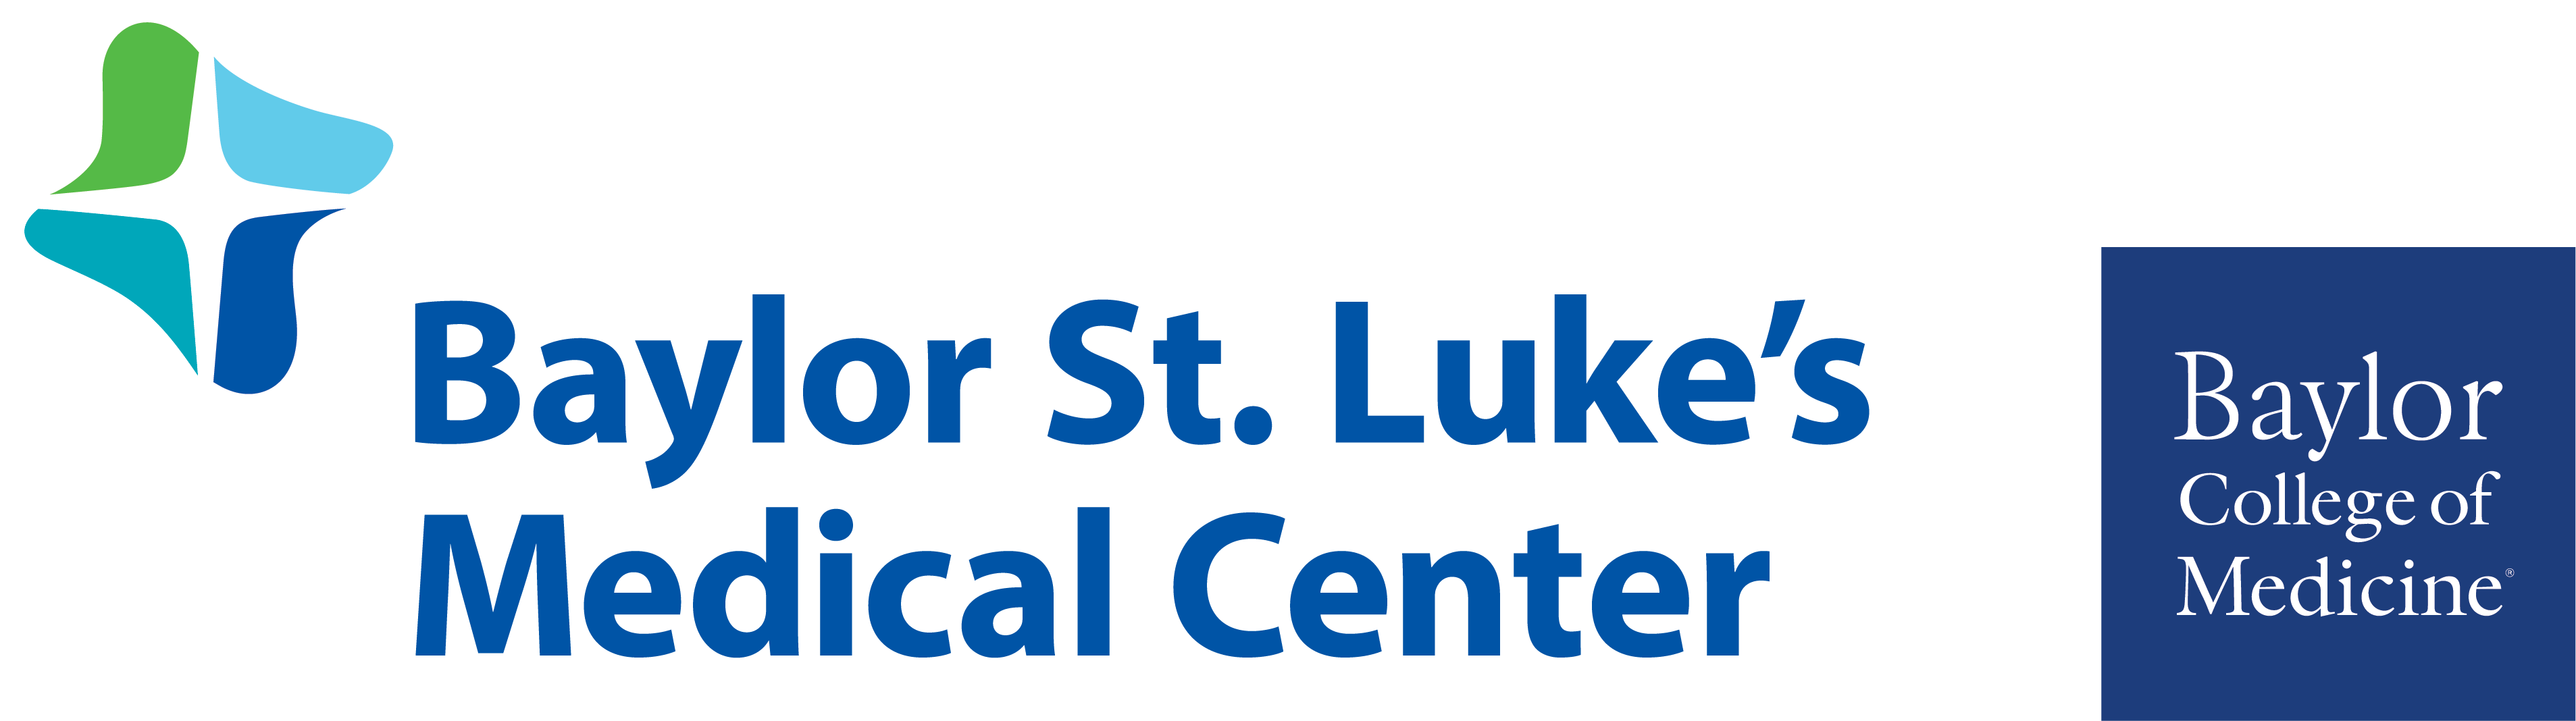 Baylor St. Luke's Medical Center - McNair Campus 